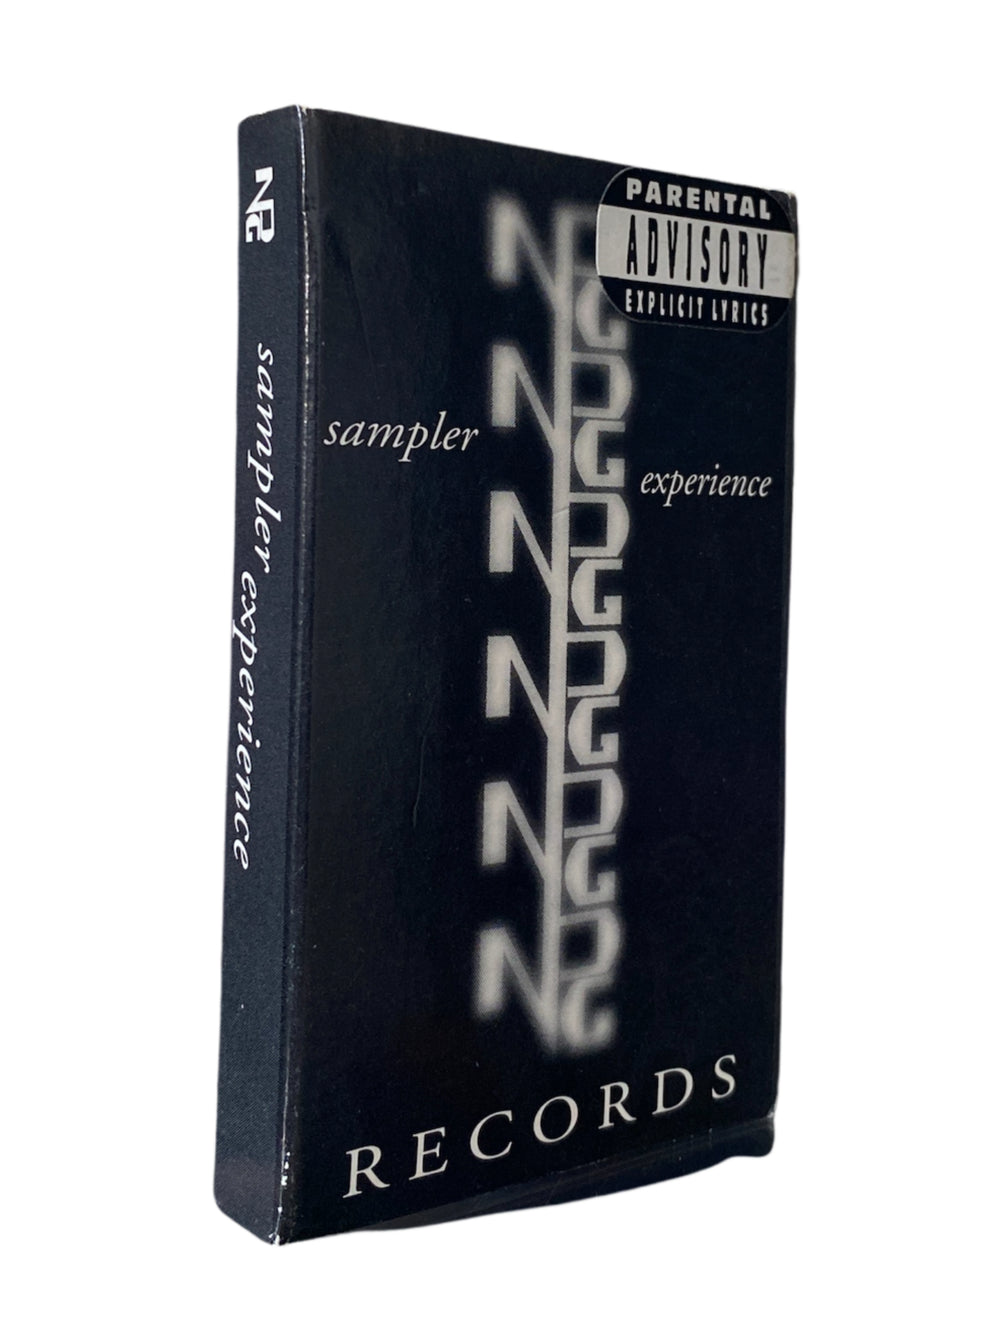 Prince – NPG Sampler Experience Original Cassette Tape USA Release PA Sticker